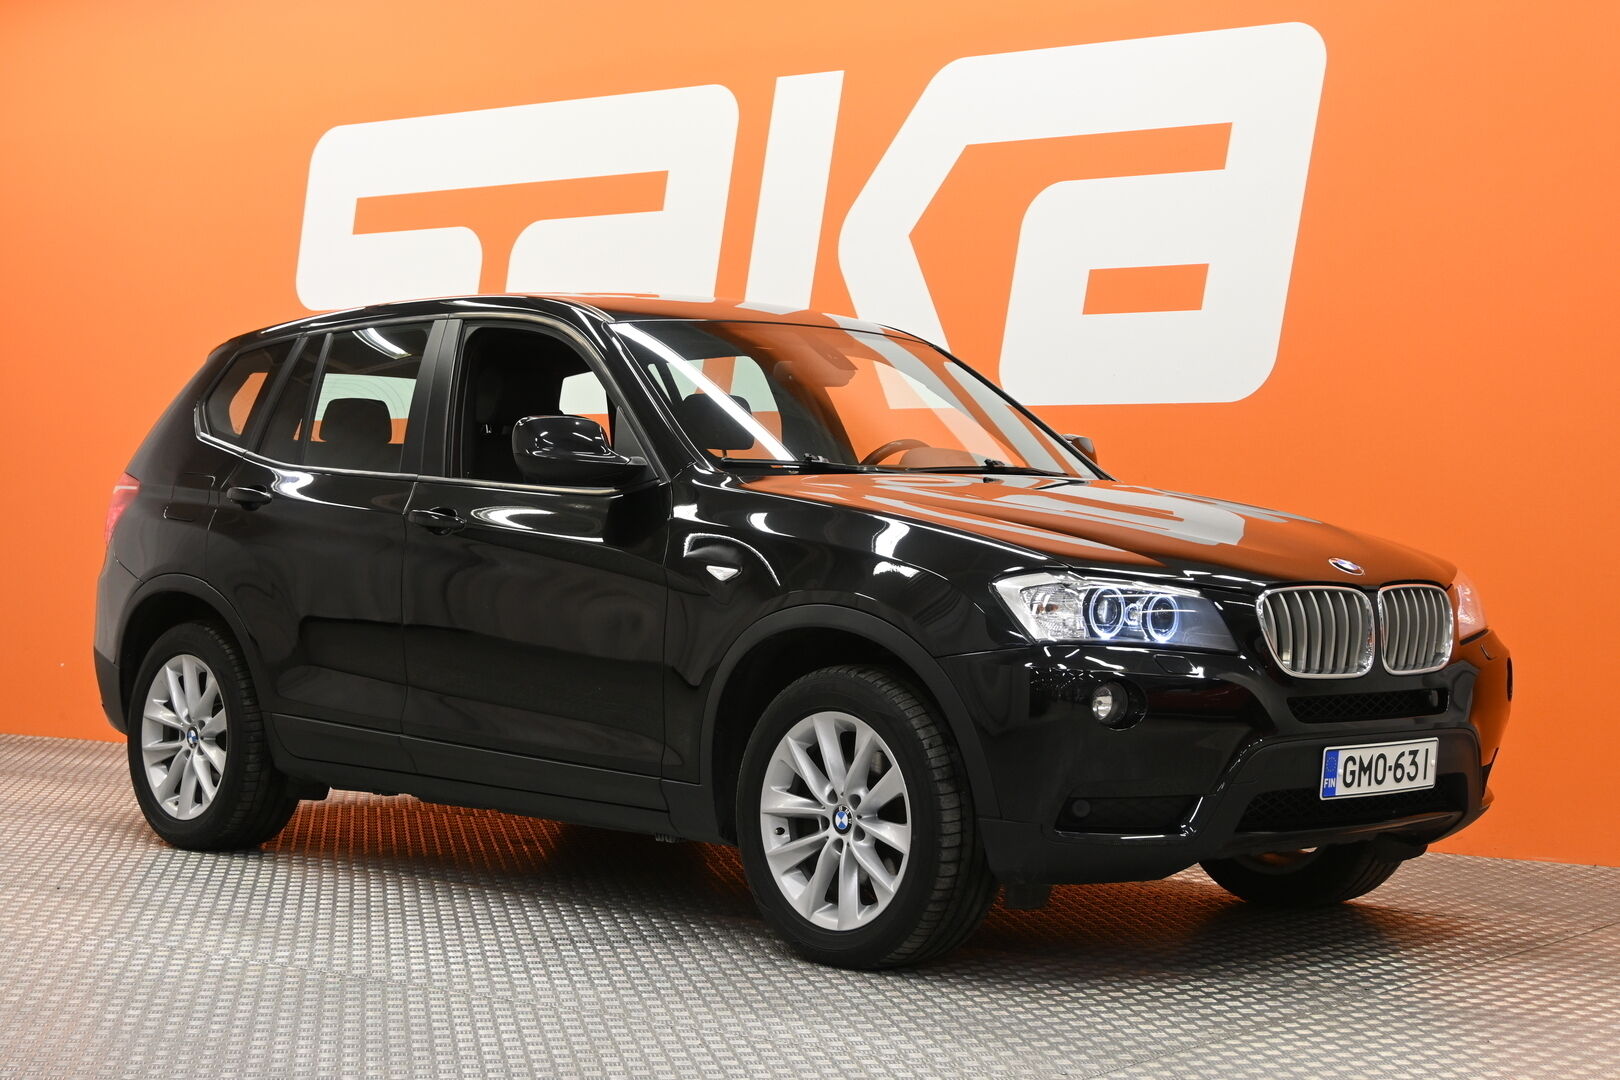 Musta Maastoauto, BMW X3 – GMO-631